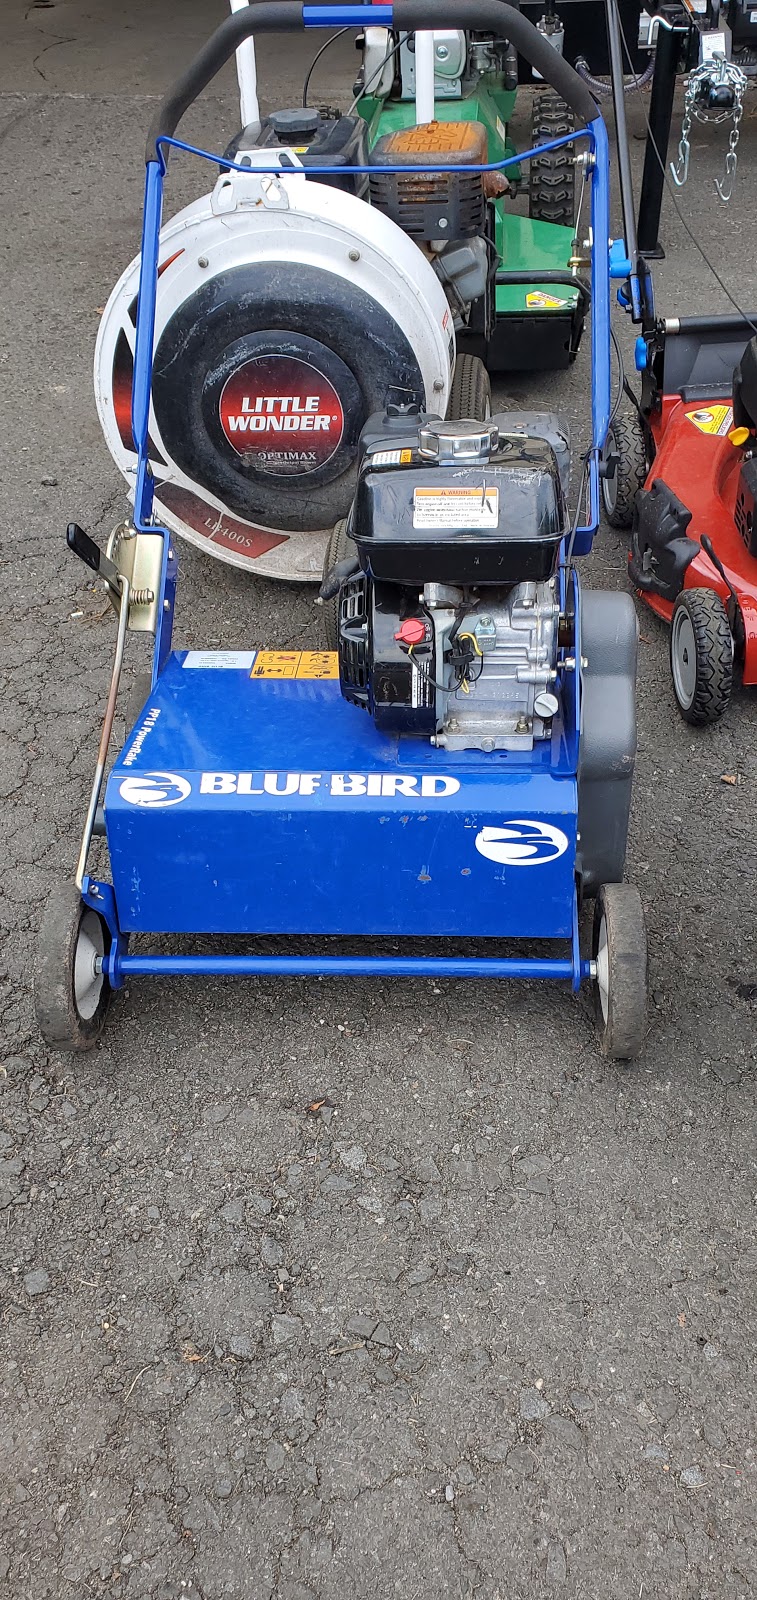 Precision Mower & Power Equipment | 3 Orchard St W, Nanuet, NY 10954 | Phone: (845) 624-2159